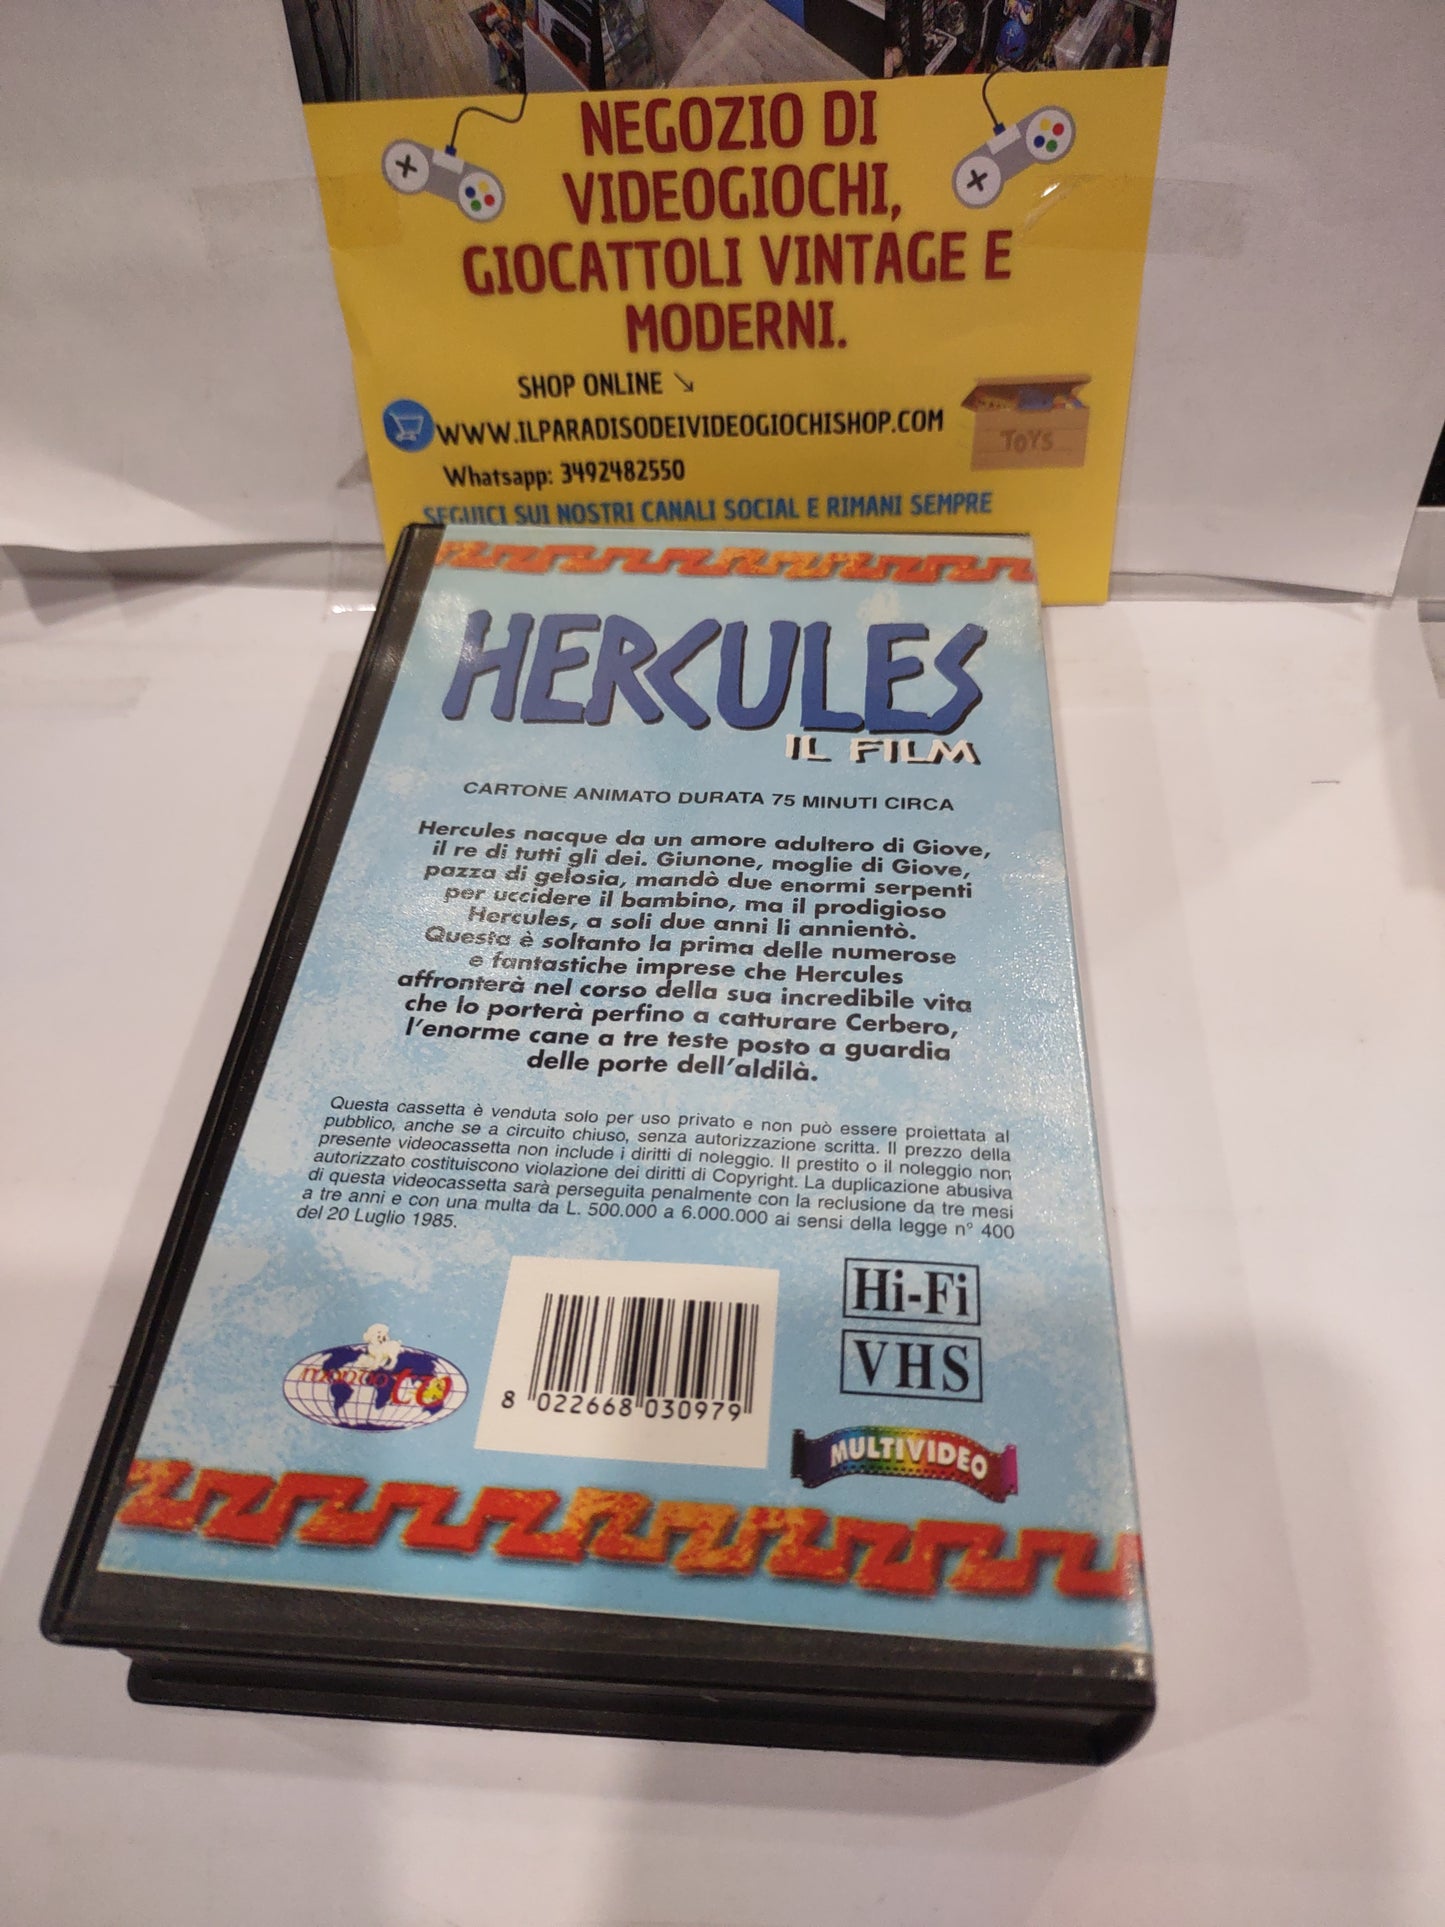 Film VHS raro Hercules italiano 1985